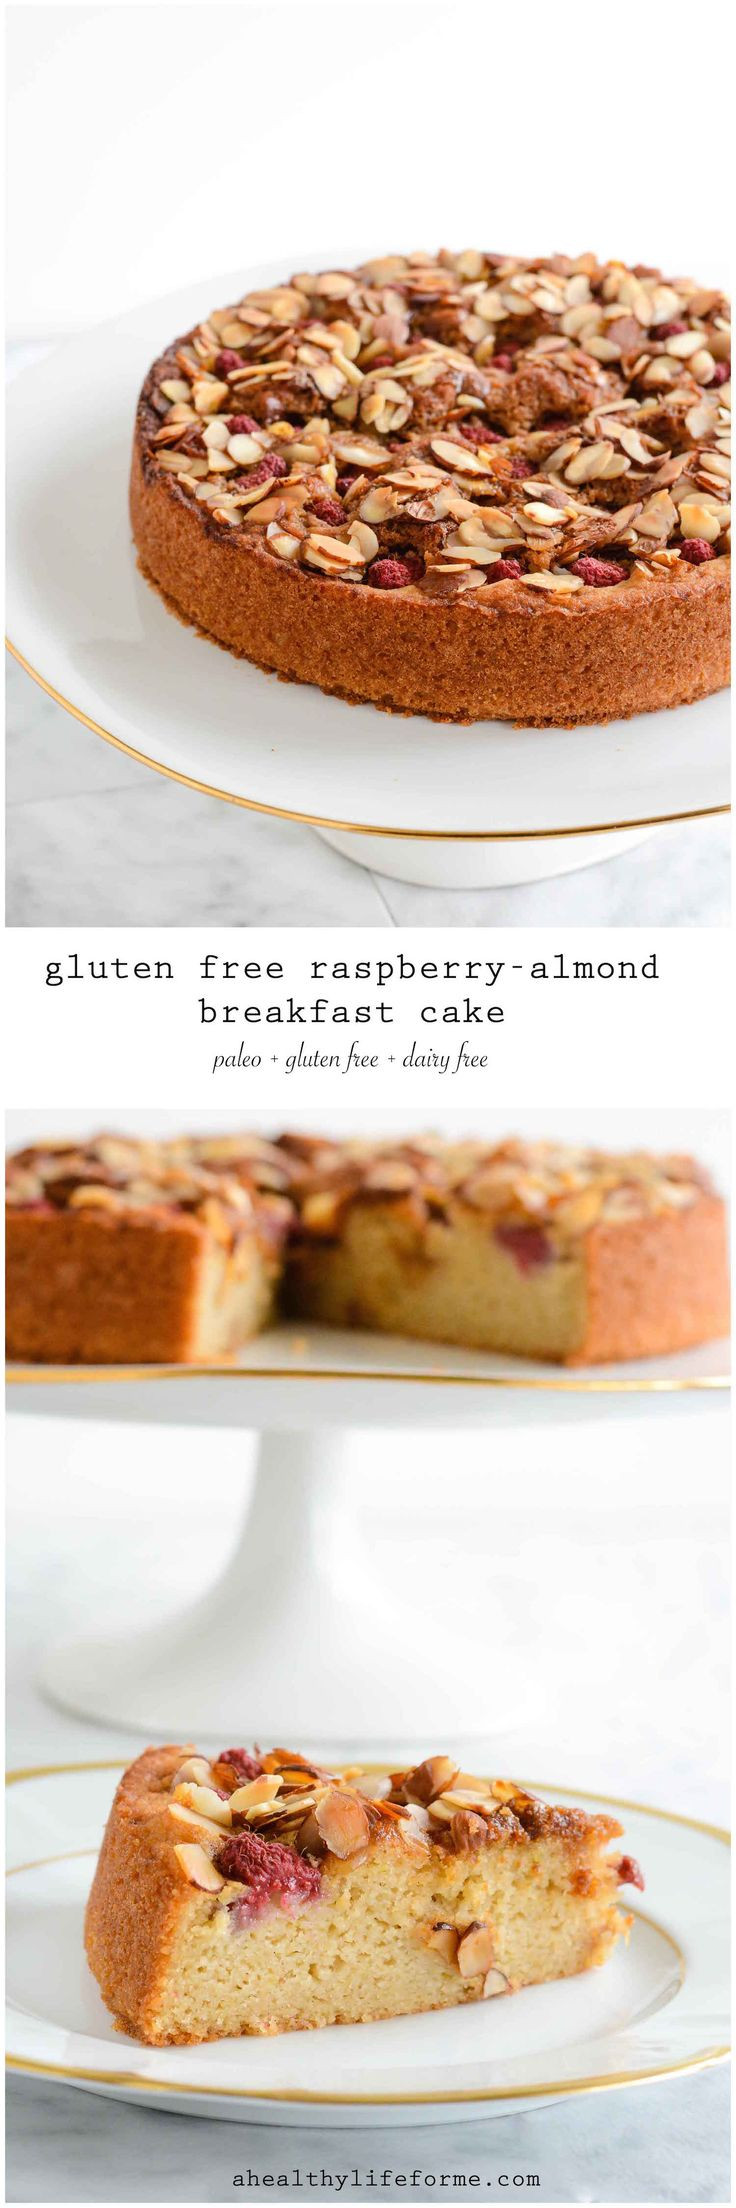 Dairy Free Breakfast Recipes
 345 best Gluten Free Breakfast Recipes images on Pinterest